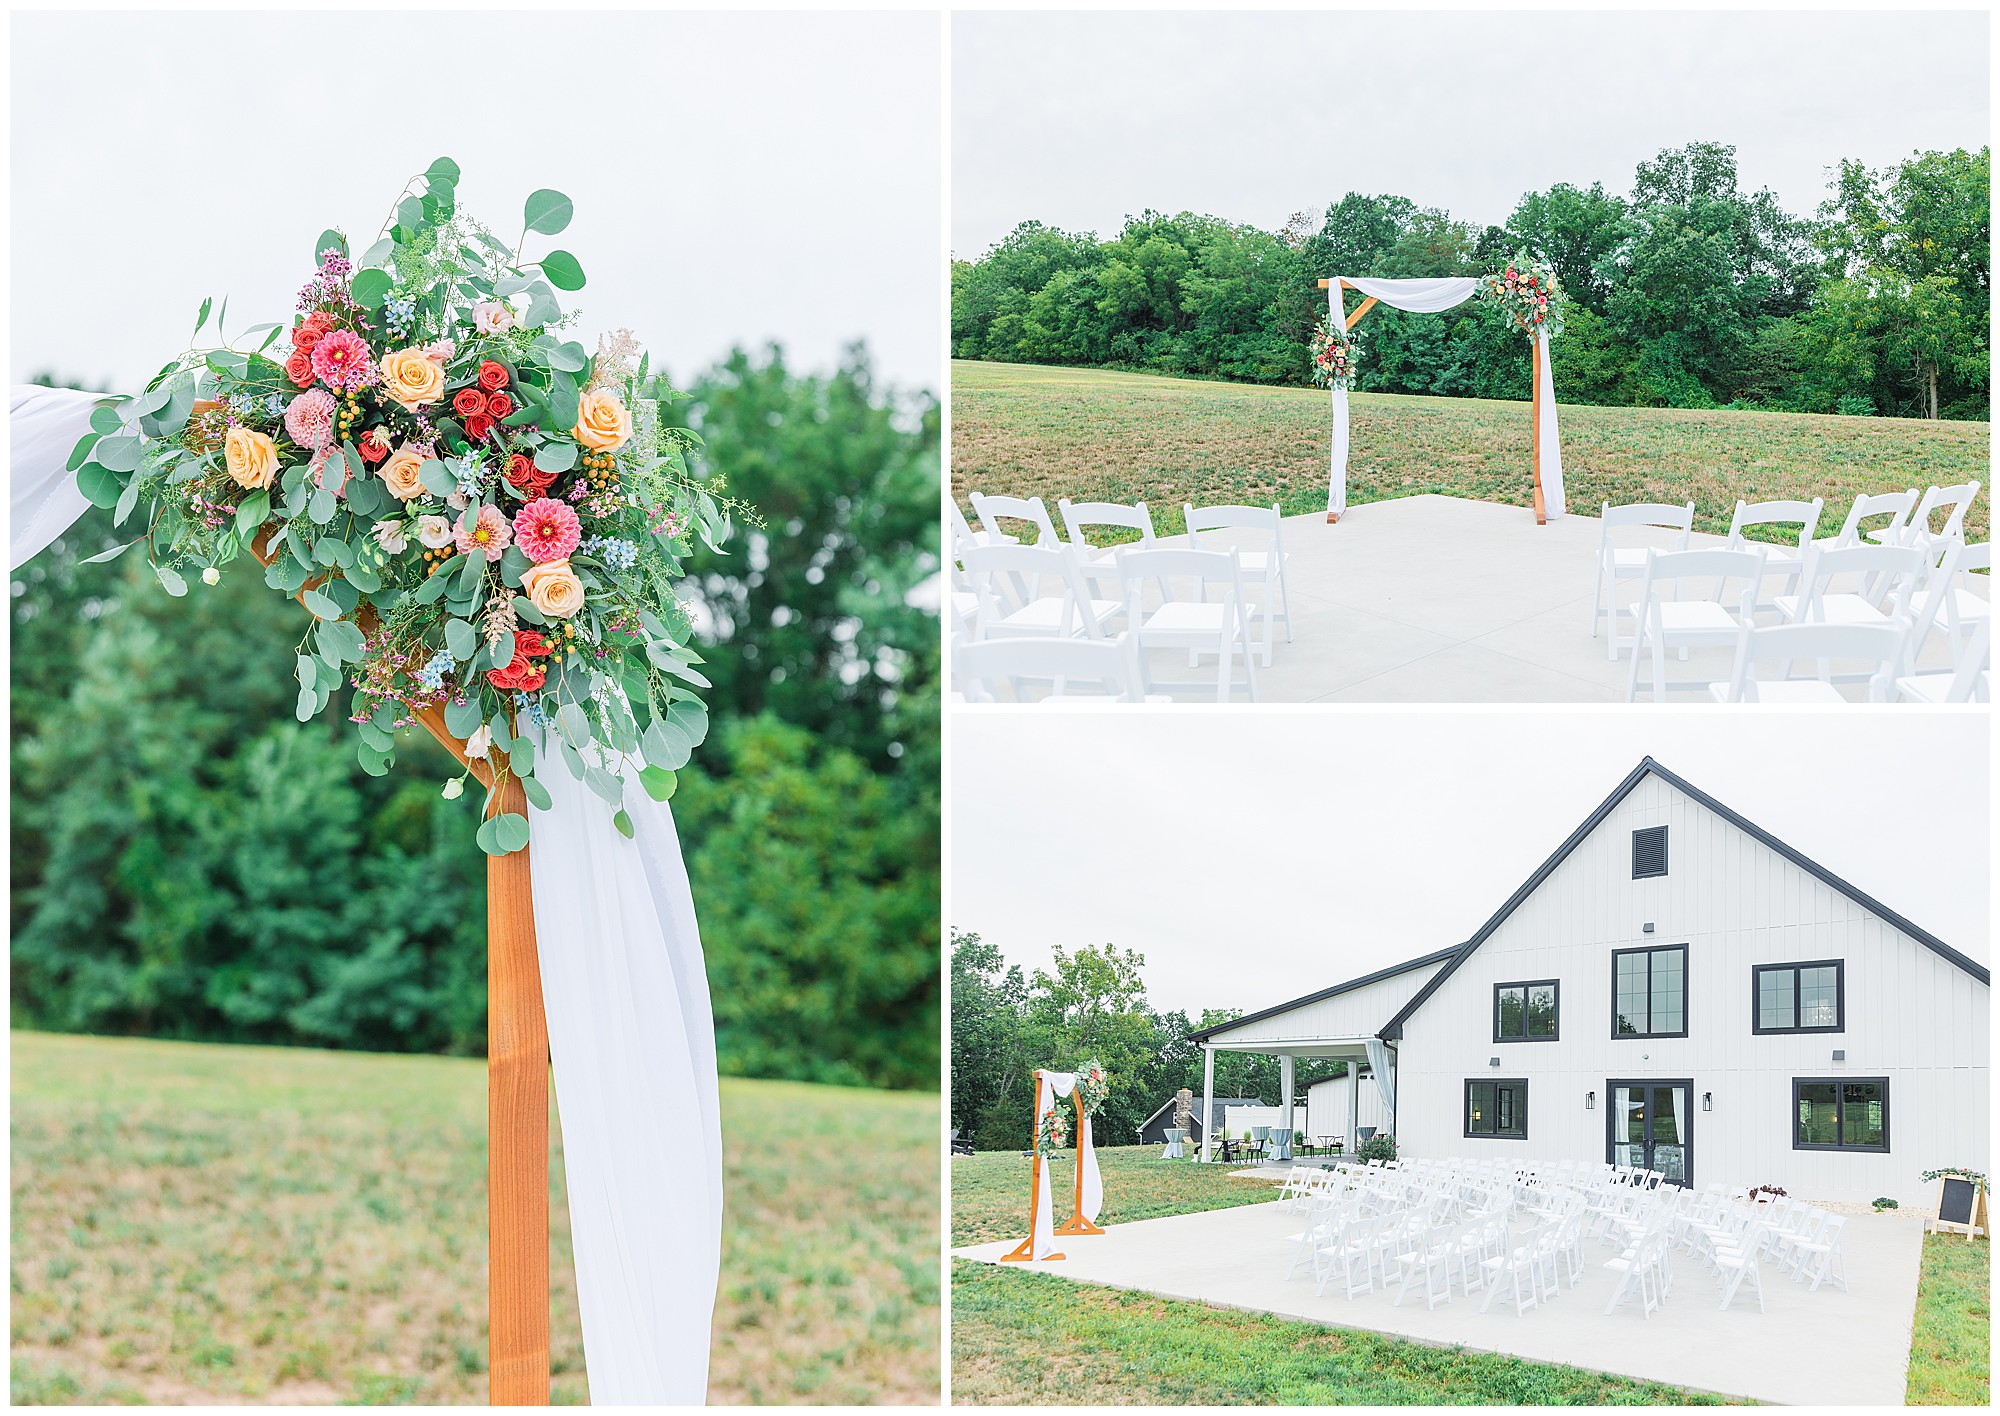 hazelwood weddings chesapeake charm photography outdoor ceremony decor